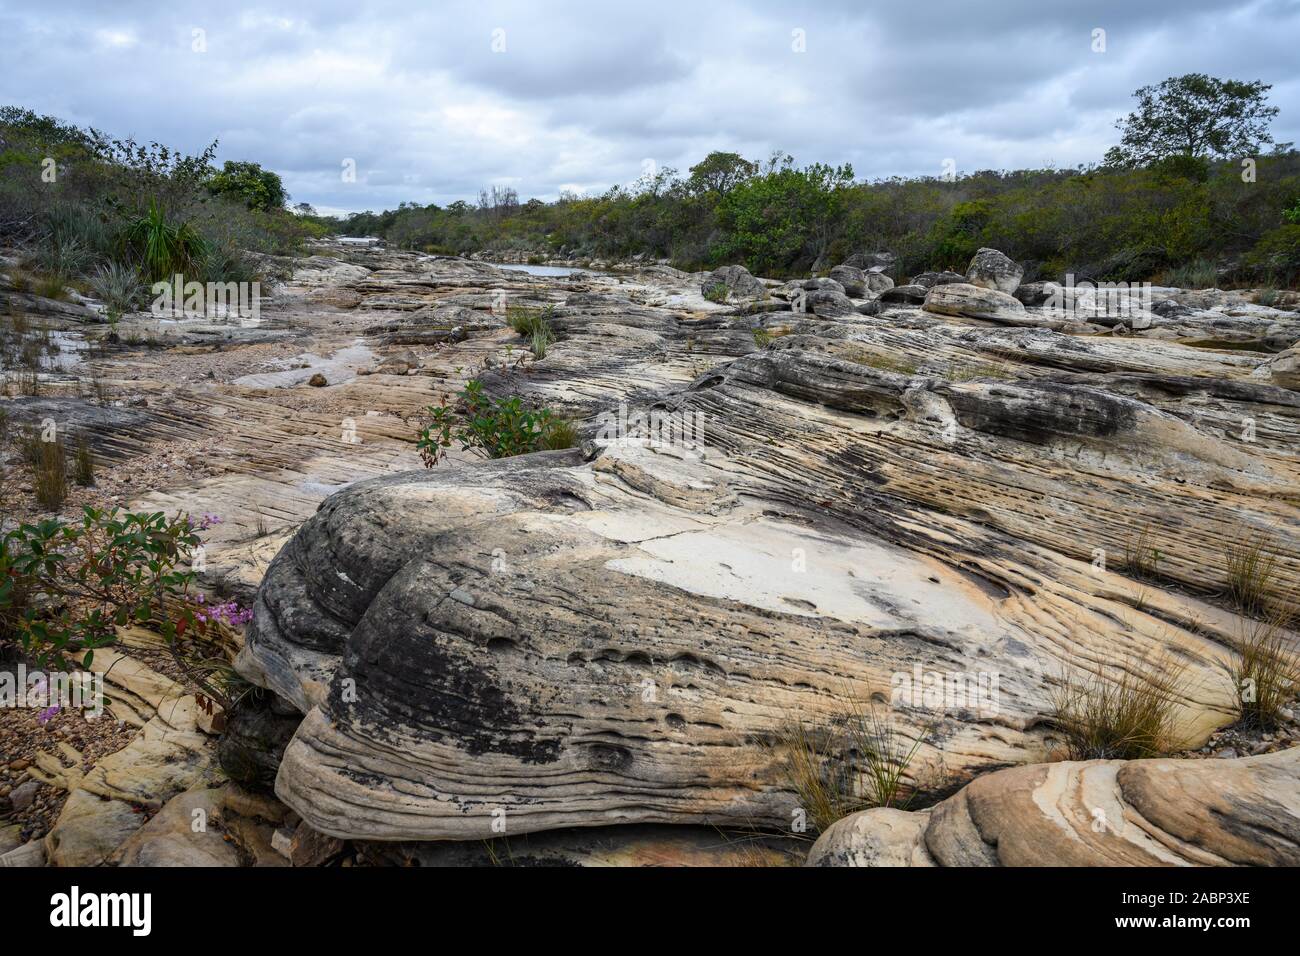 Outcrops of Precambrian sandstone show clear bedding. Botumirim, Minas Gerais, NE Brazil. Stock Photo